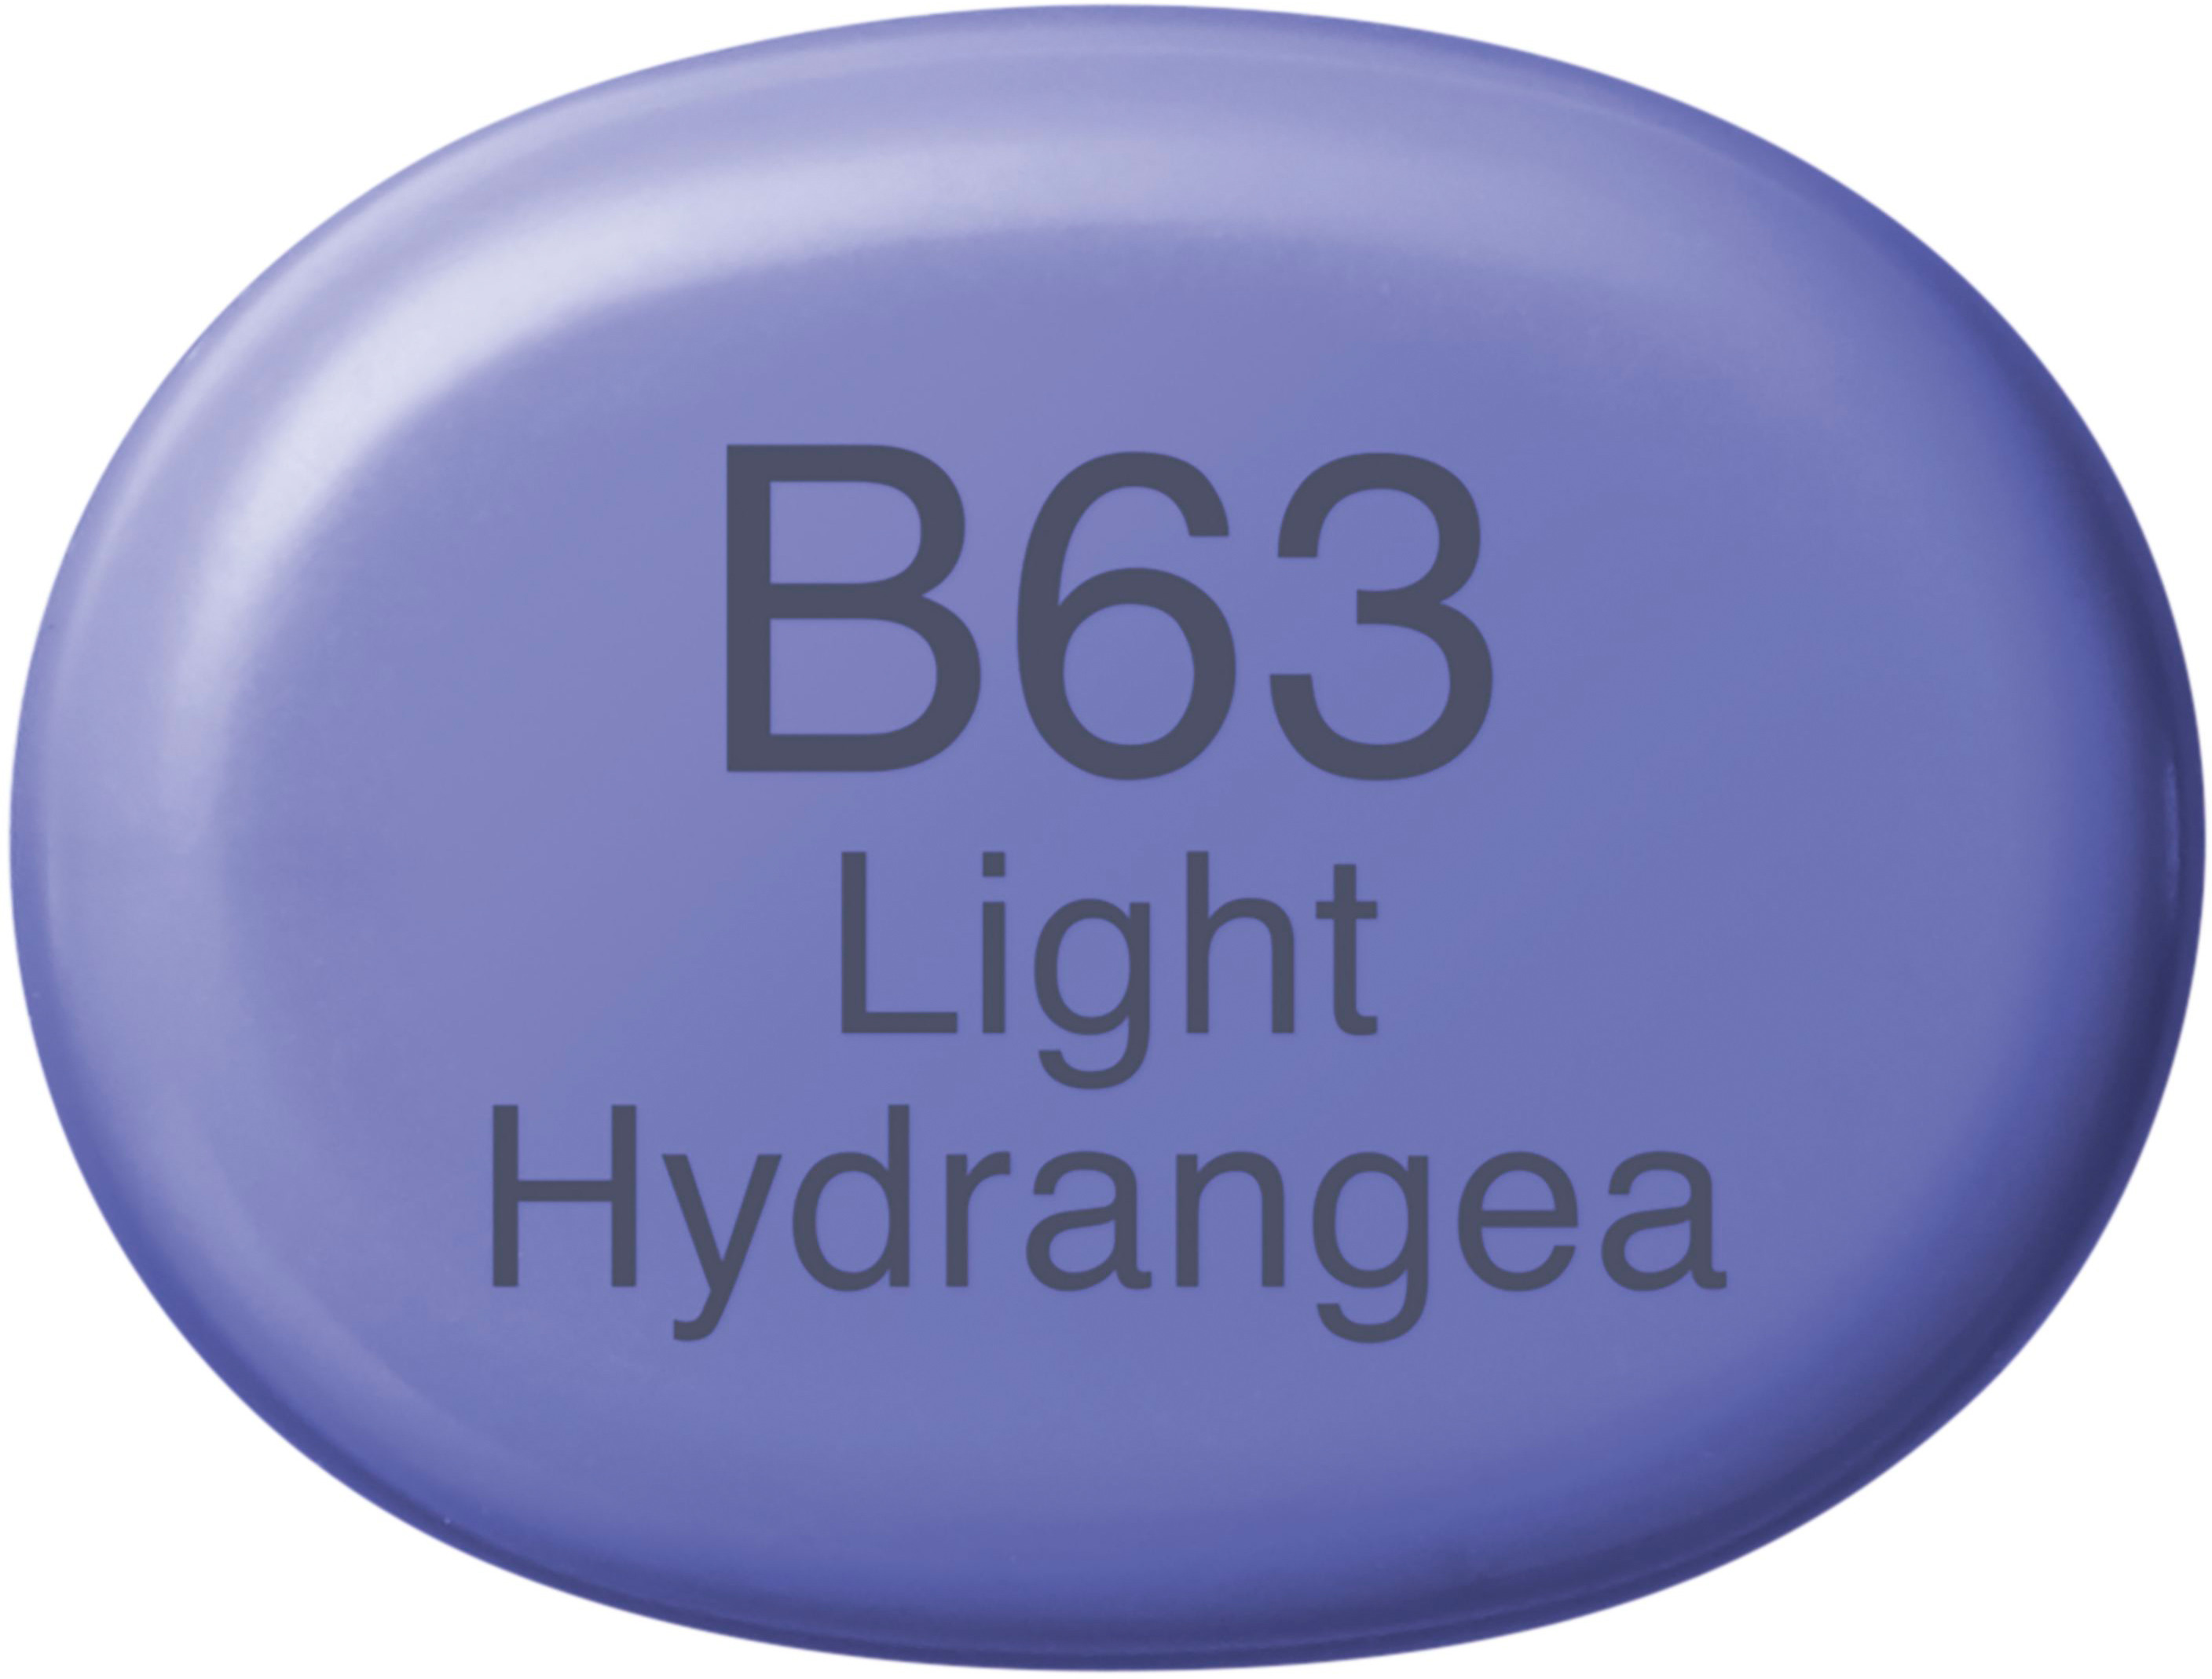 COPIC Marker Sketch 21075154 B63 - Light Hydrangea